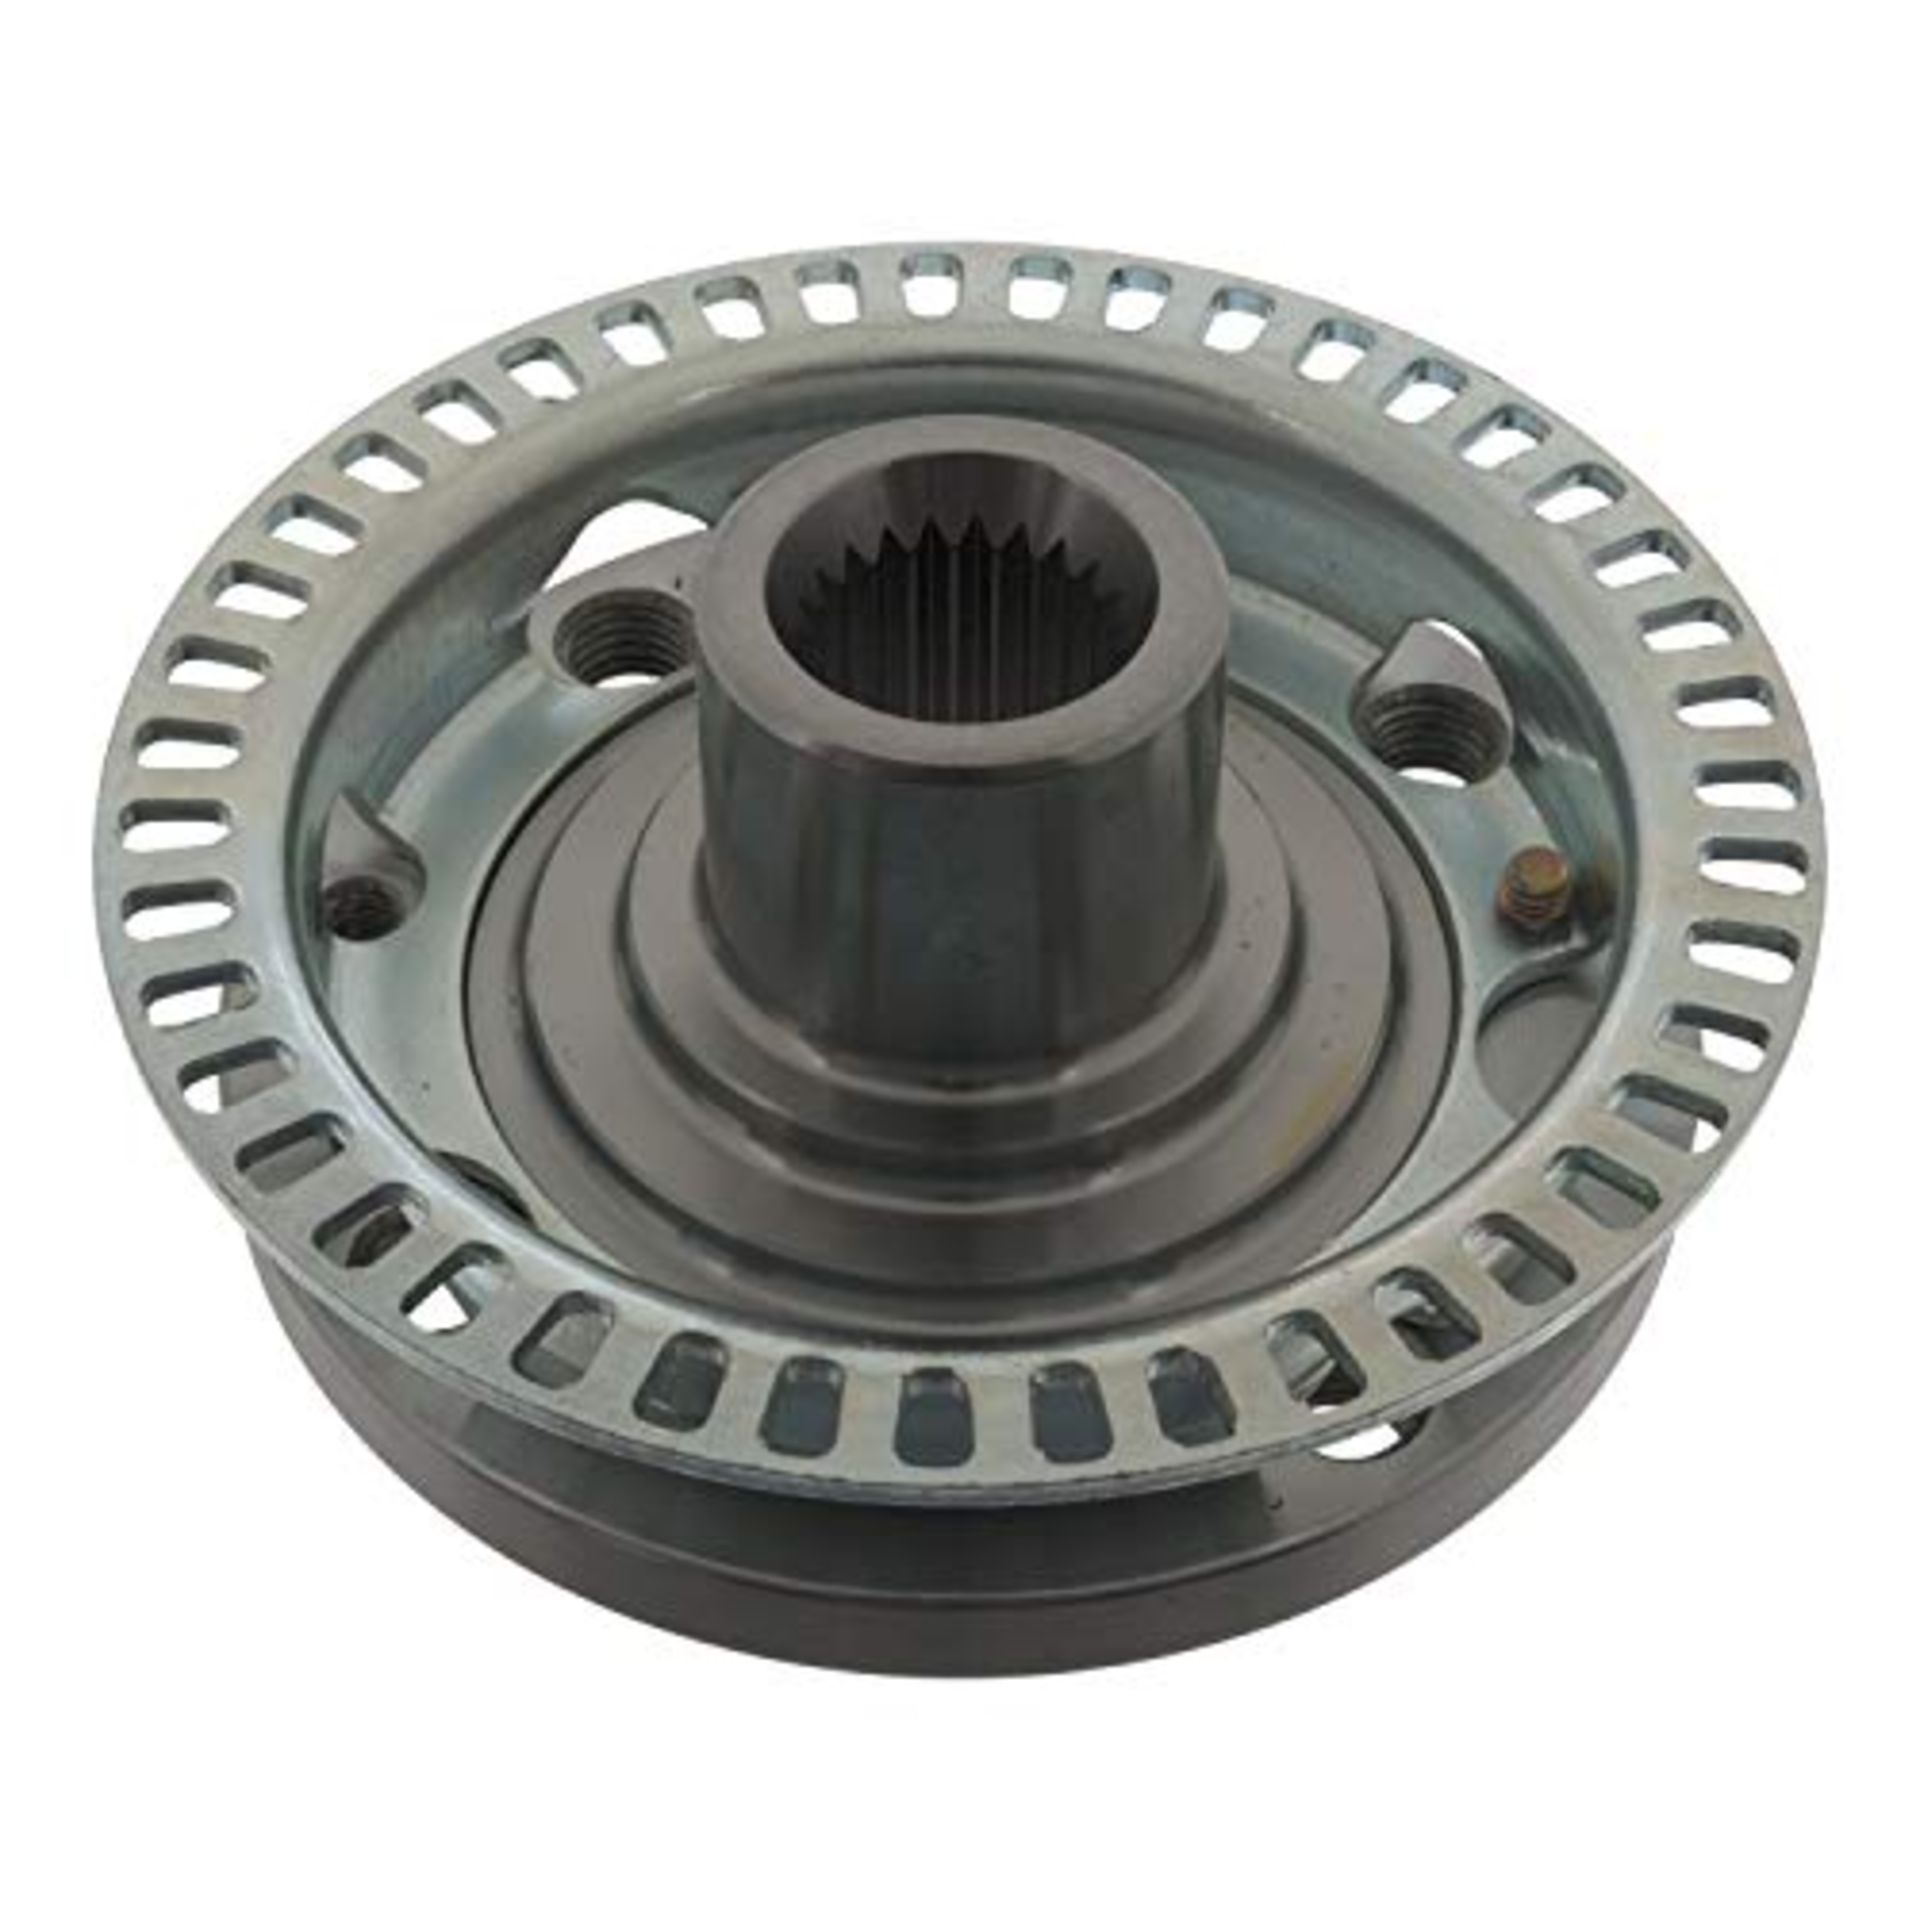 febi bilstein 01901 Wheel hub without wheel bearing, with ABS impulse ring, 1 piece